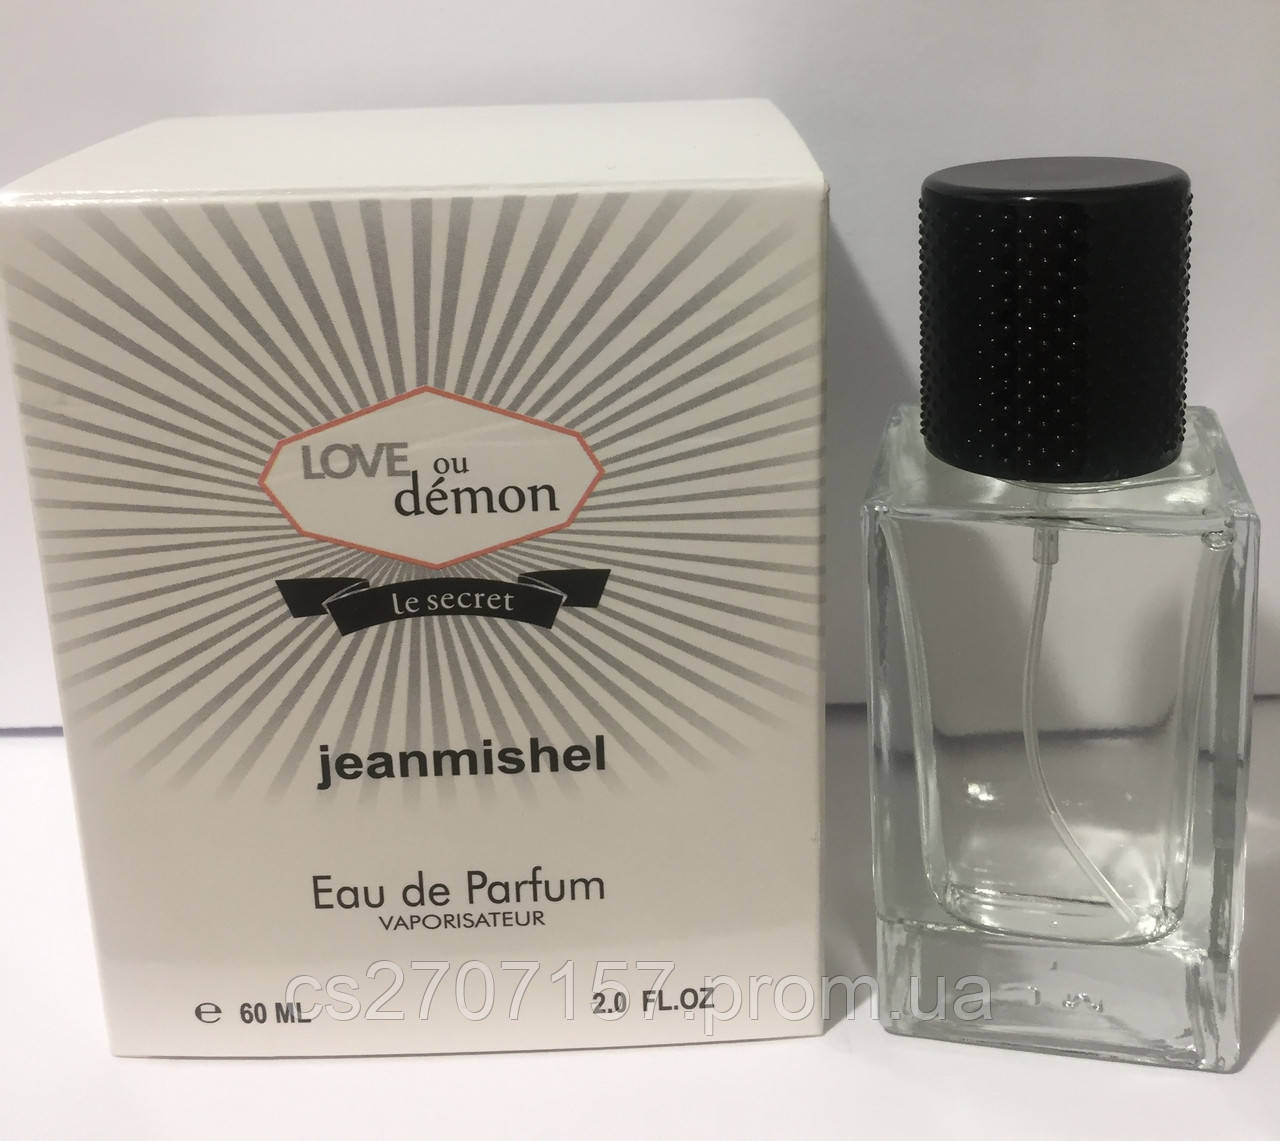 Жіночий парфум Jeanmishel LoveOu Demon Le Secret 60 мл